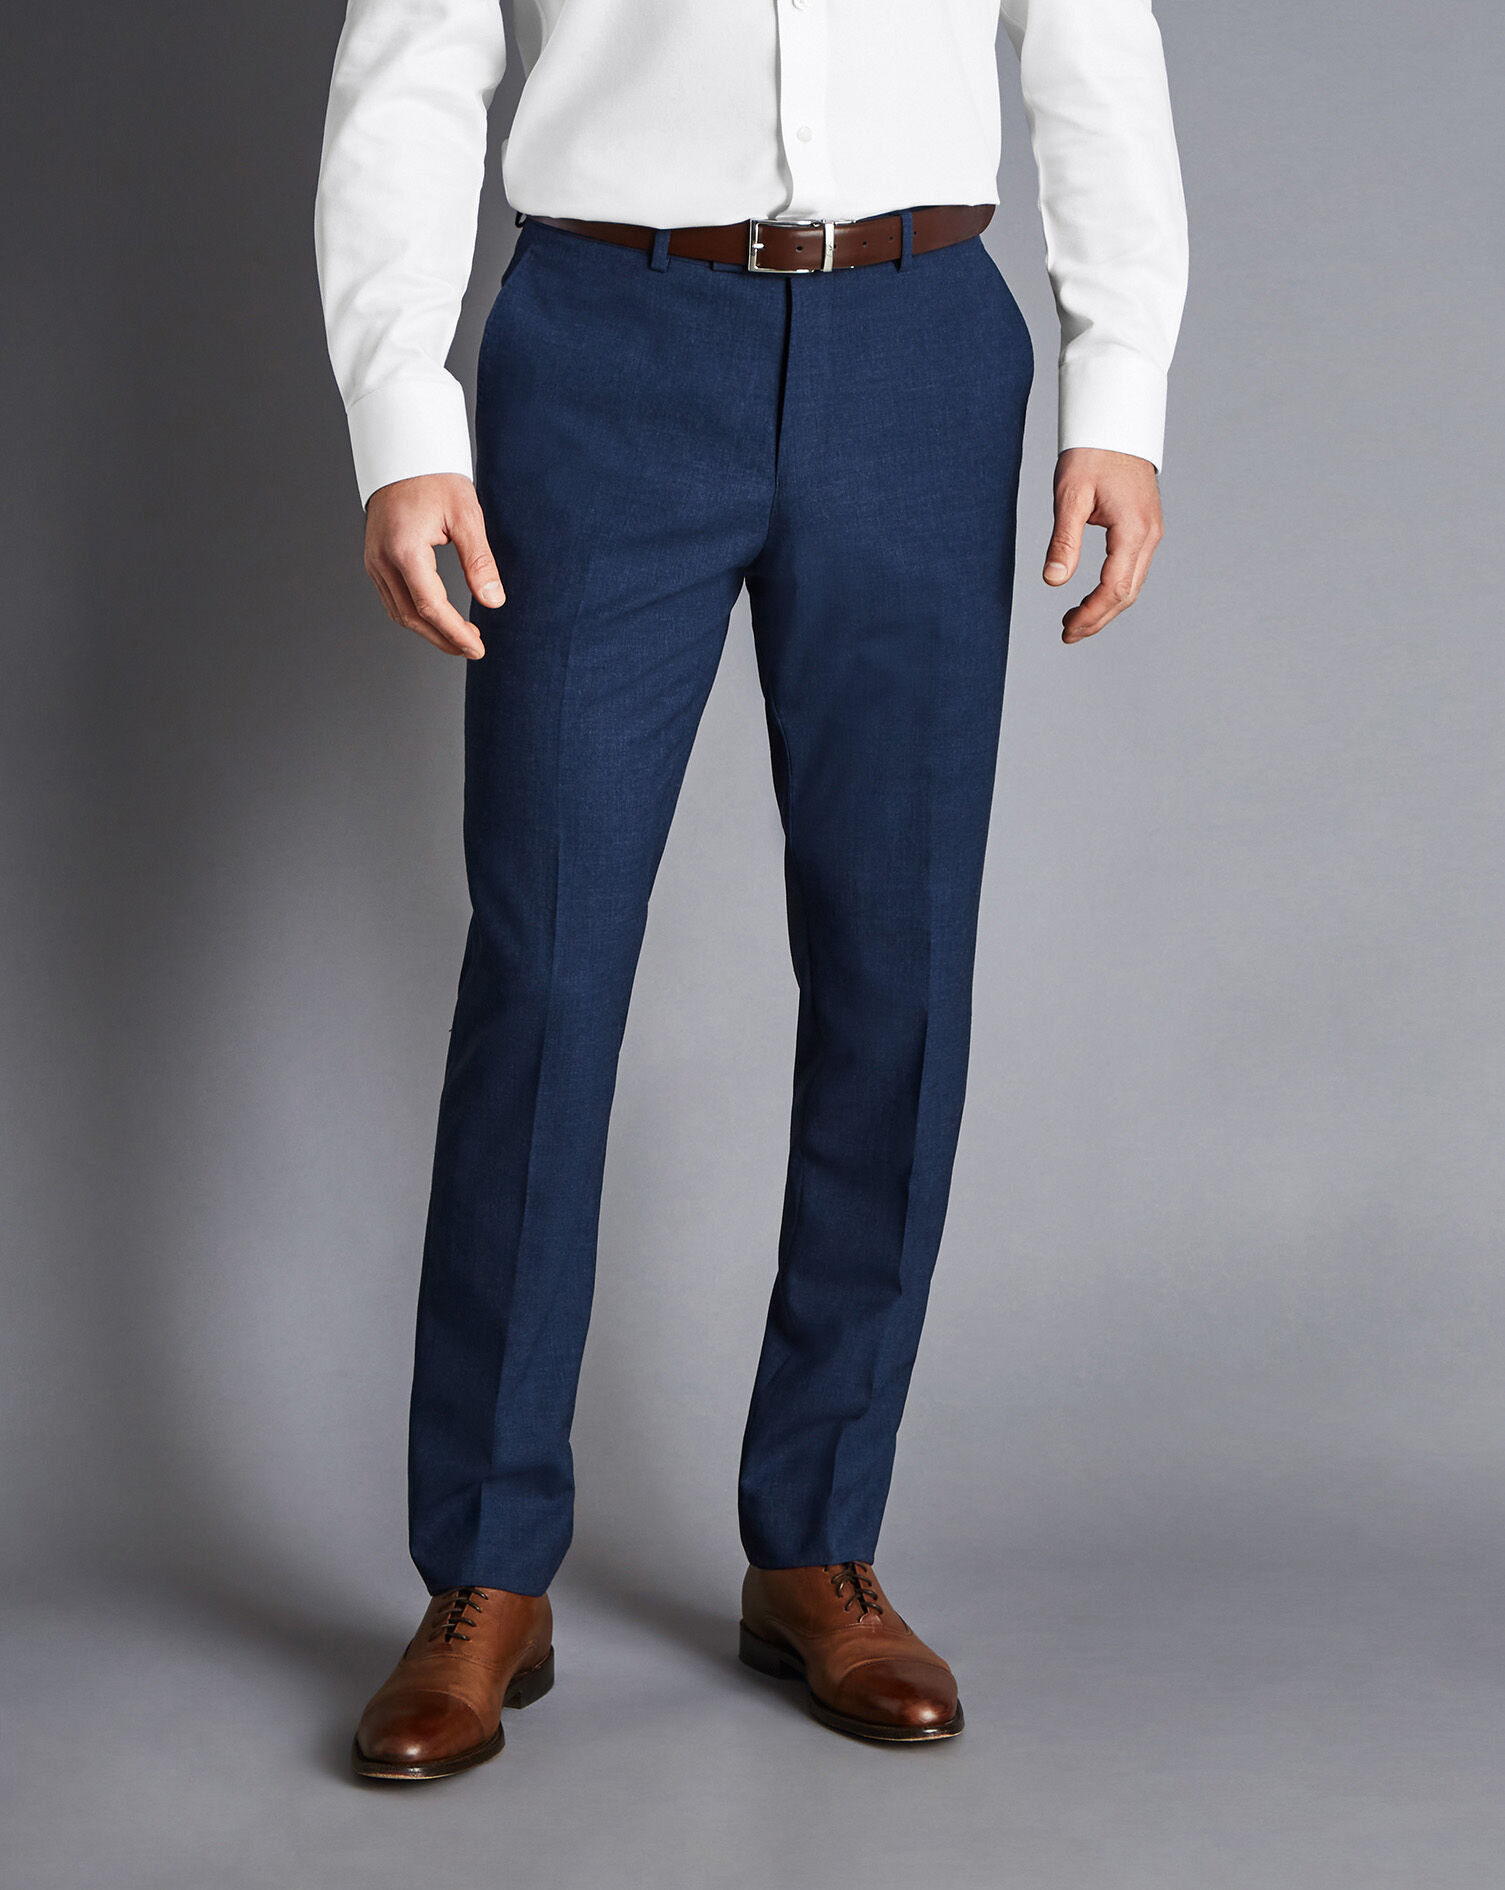 Navy Blue Pant Matching Shirt - Fashion Guide